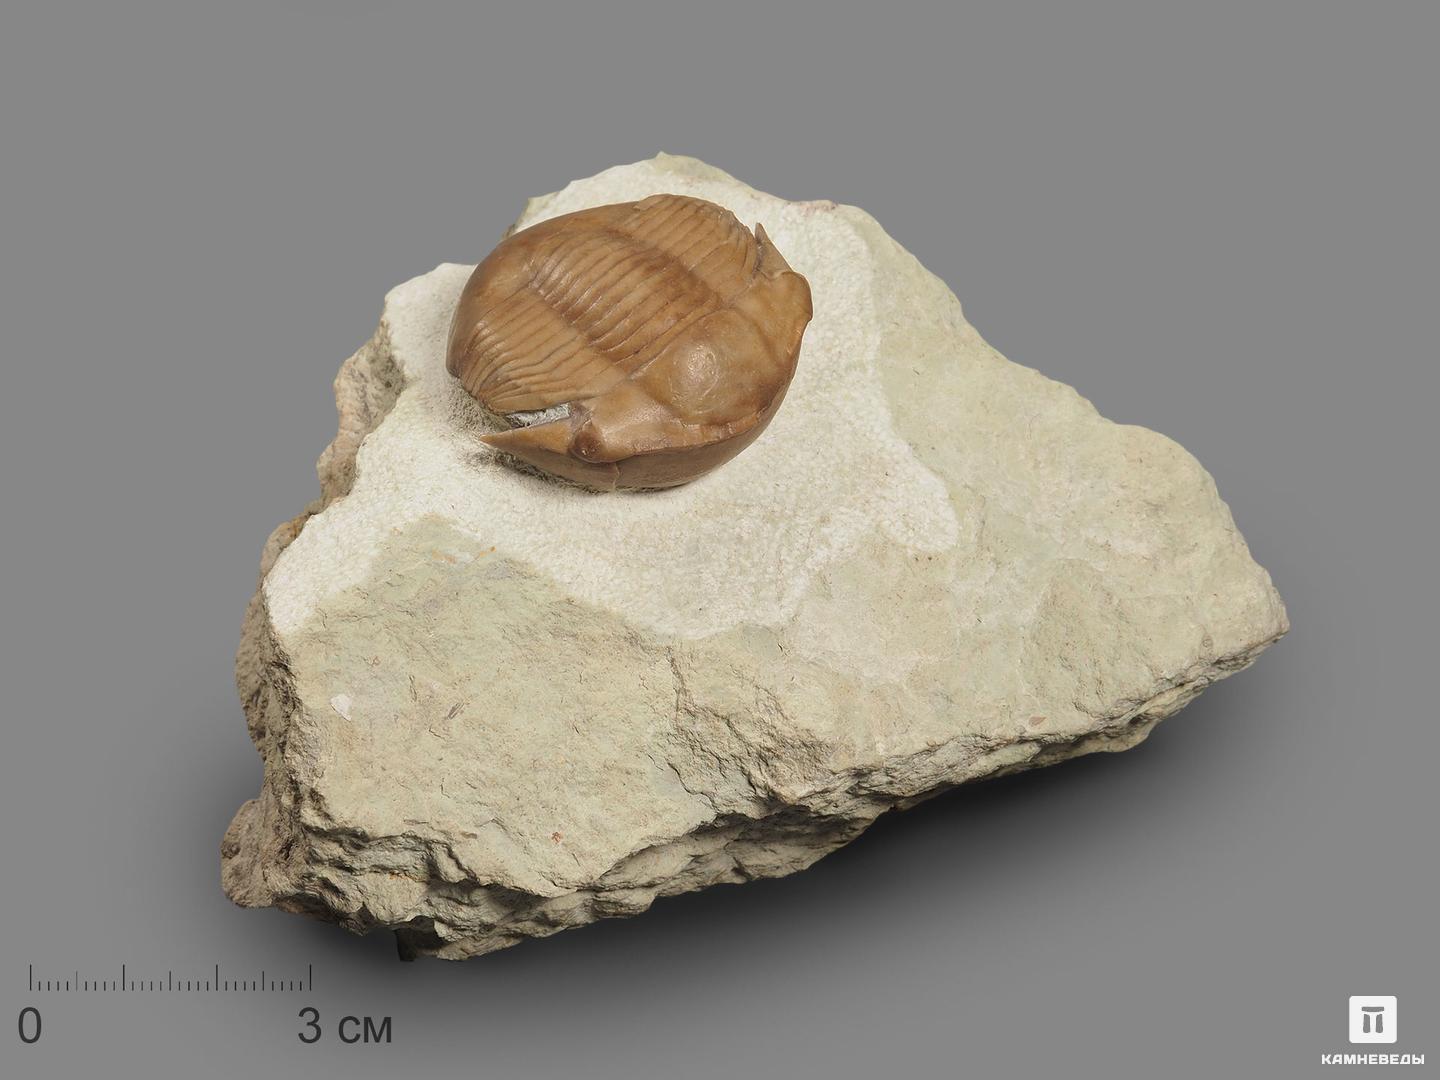 Трилобит illaenus schmidti (NIESZKOWSKI 1857) на породе, 11х7,7х4,4 см, 18494, фото 1